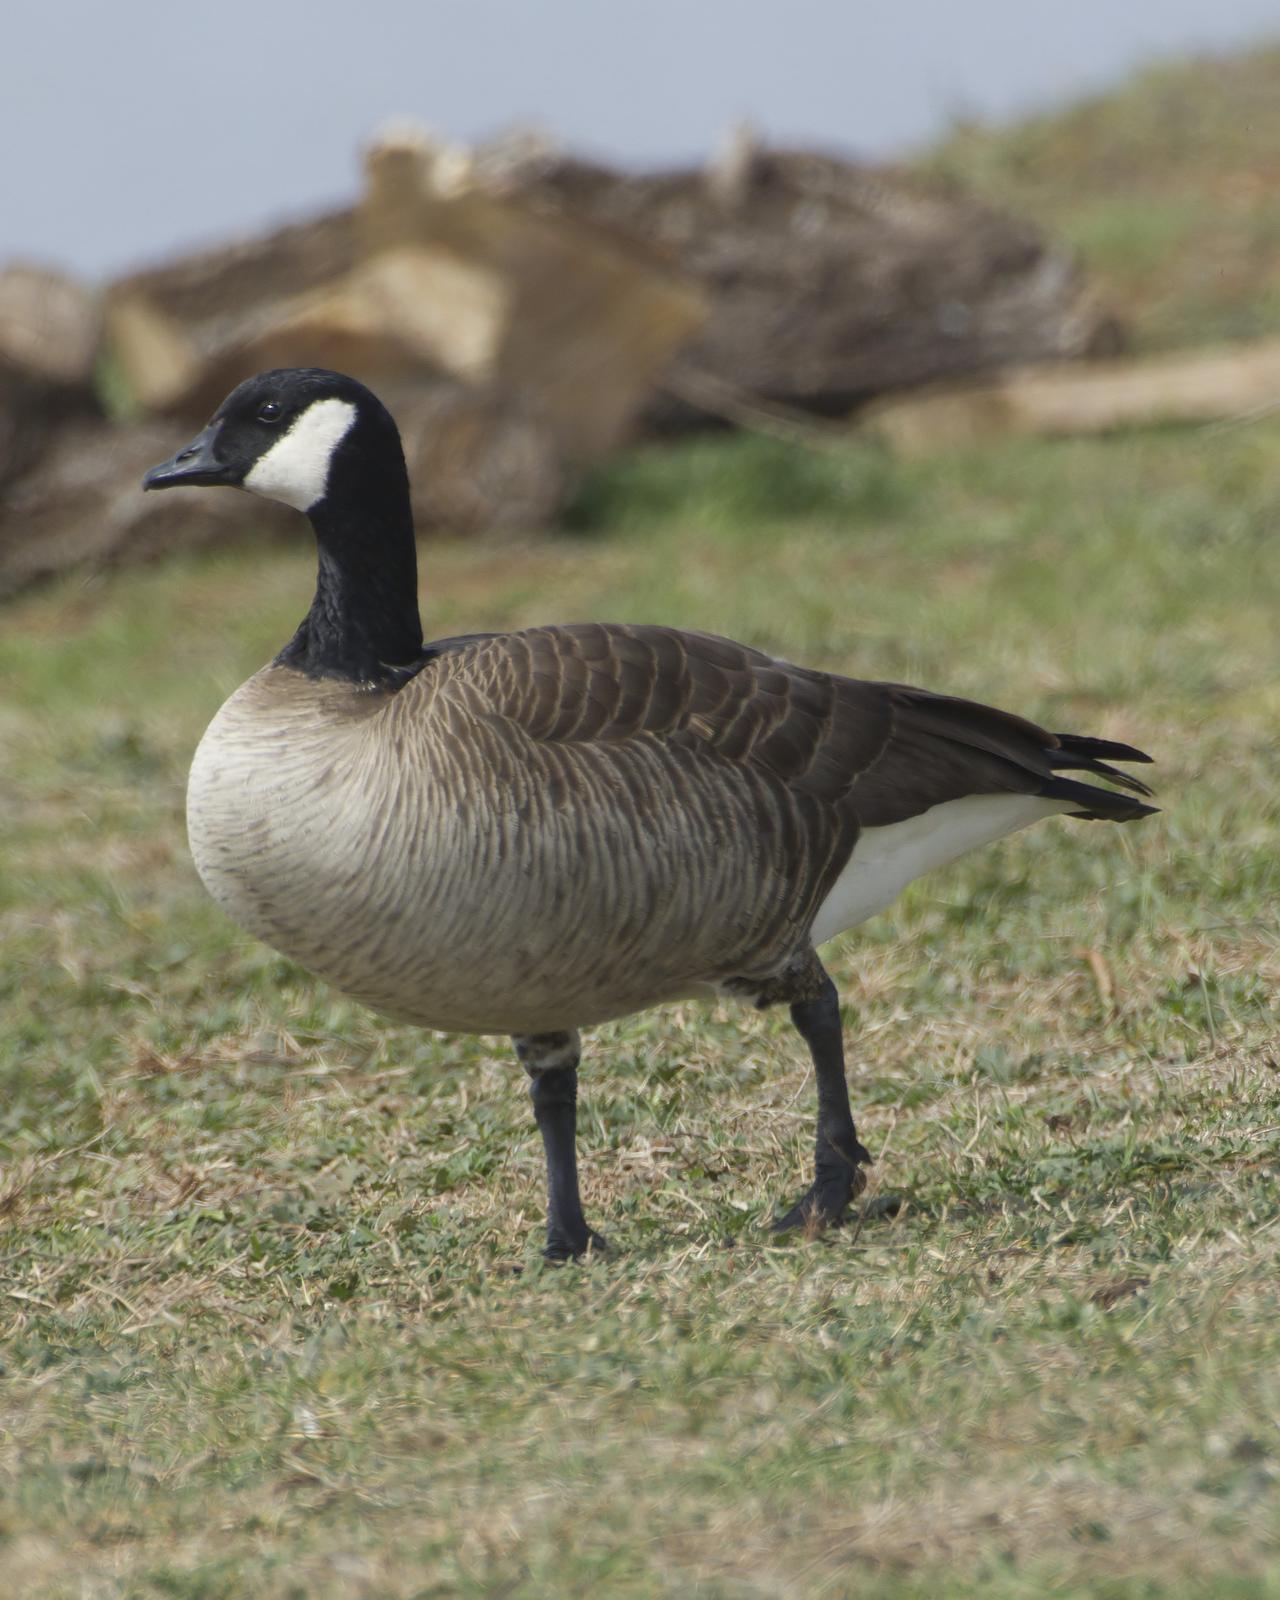 Cackling Goose Photo by Bill Adams